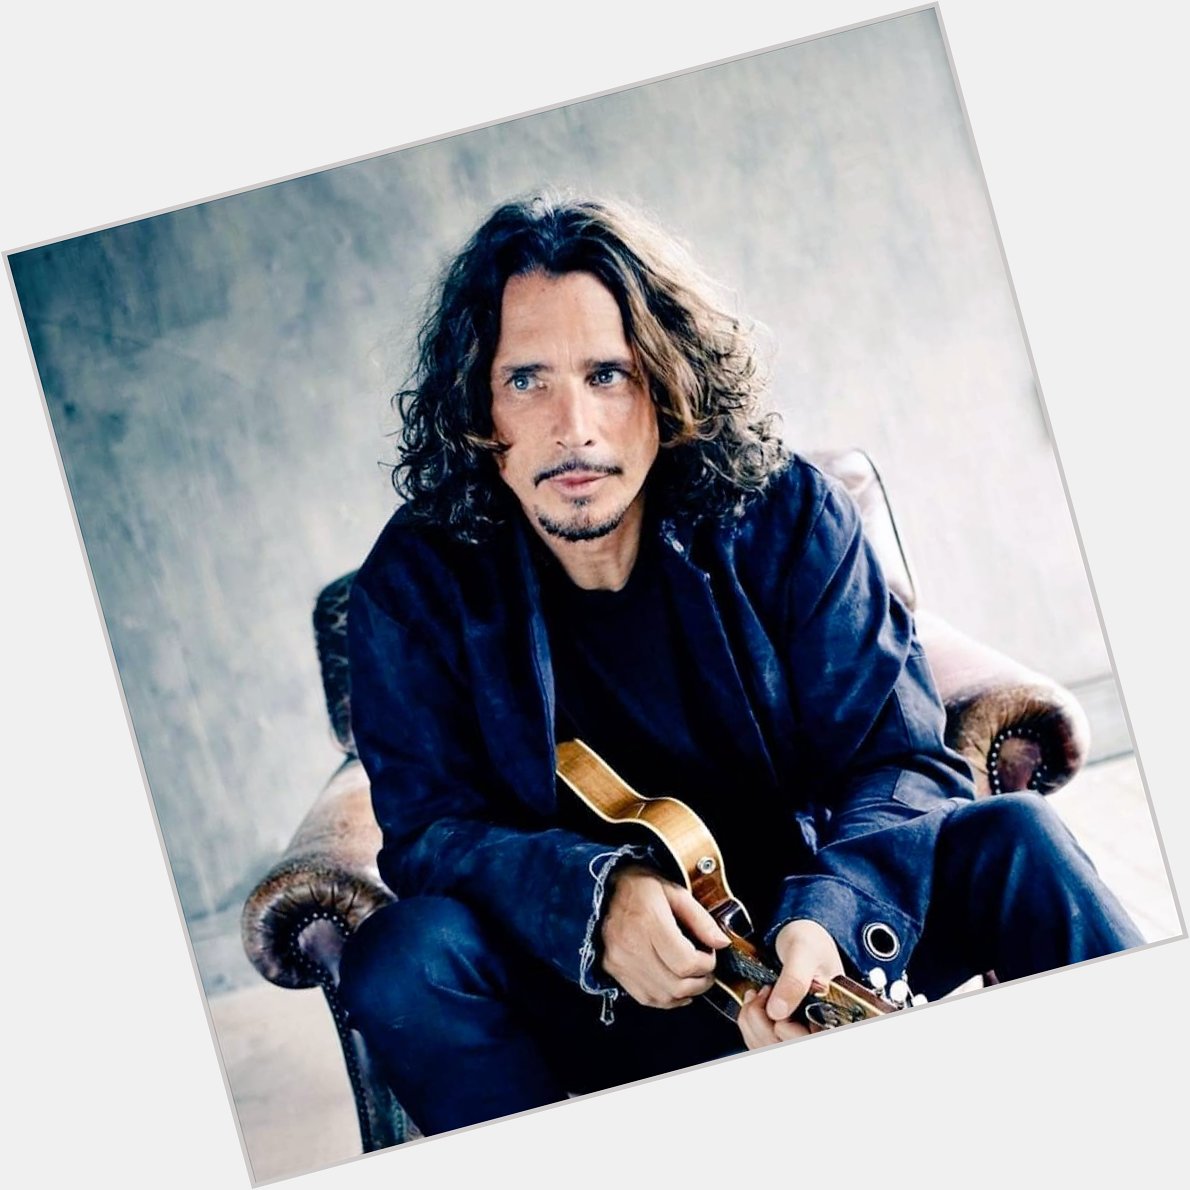  Happy heavenly birthday  Christopher John Chris Cornell July 20, 1964 
May 18, 2017  
Soundgarden 
Audioslave 